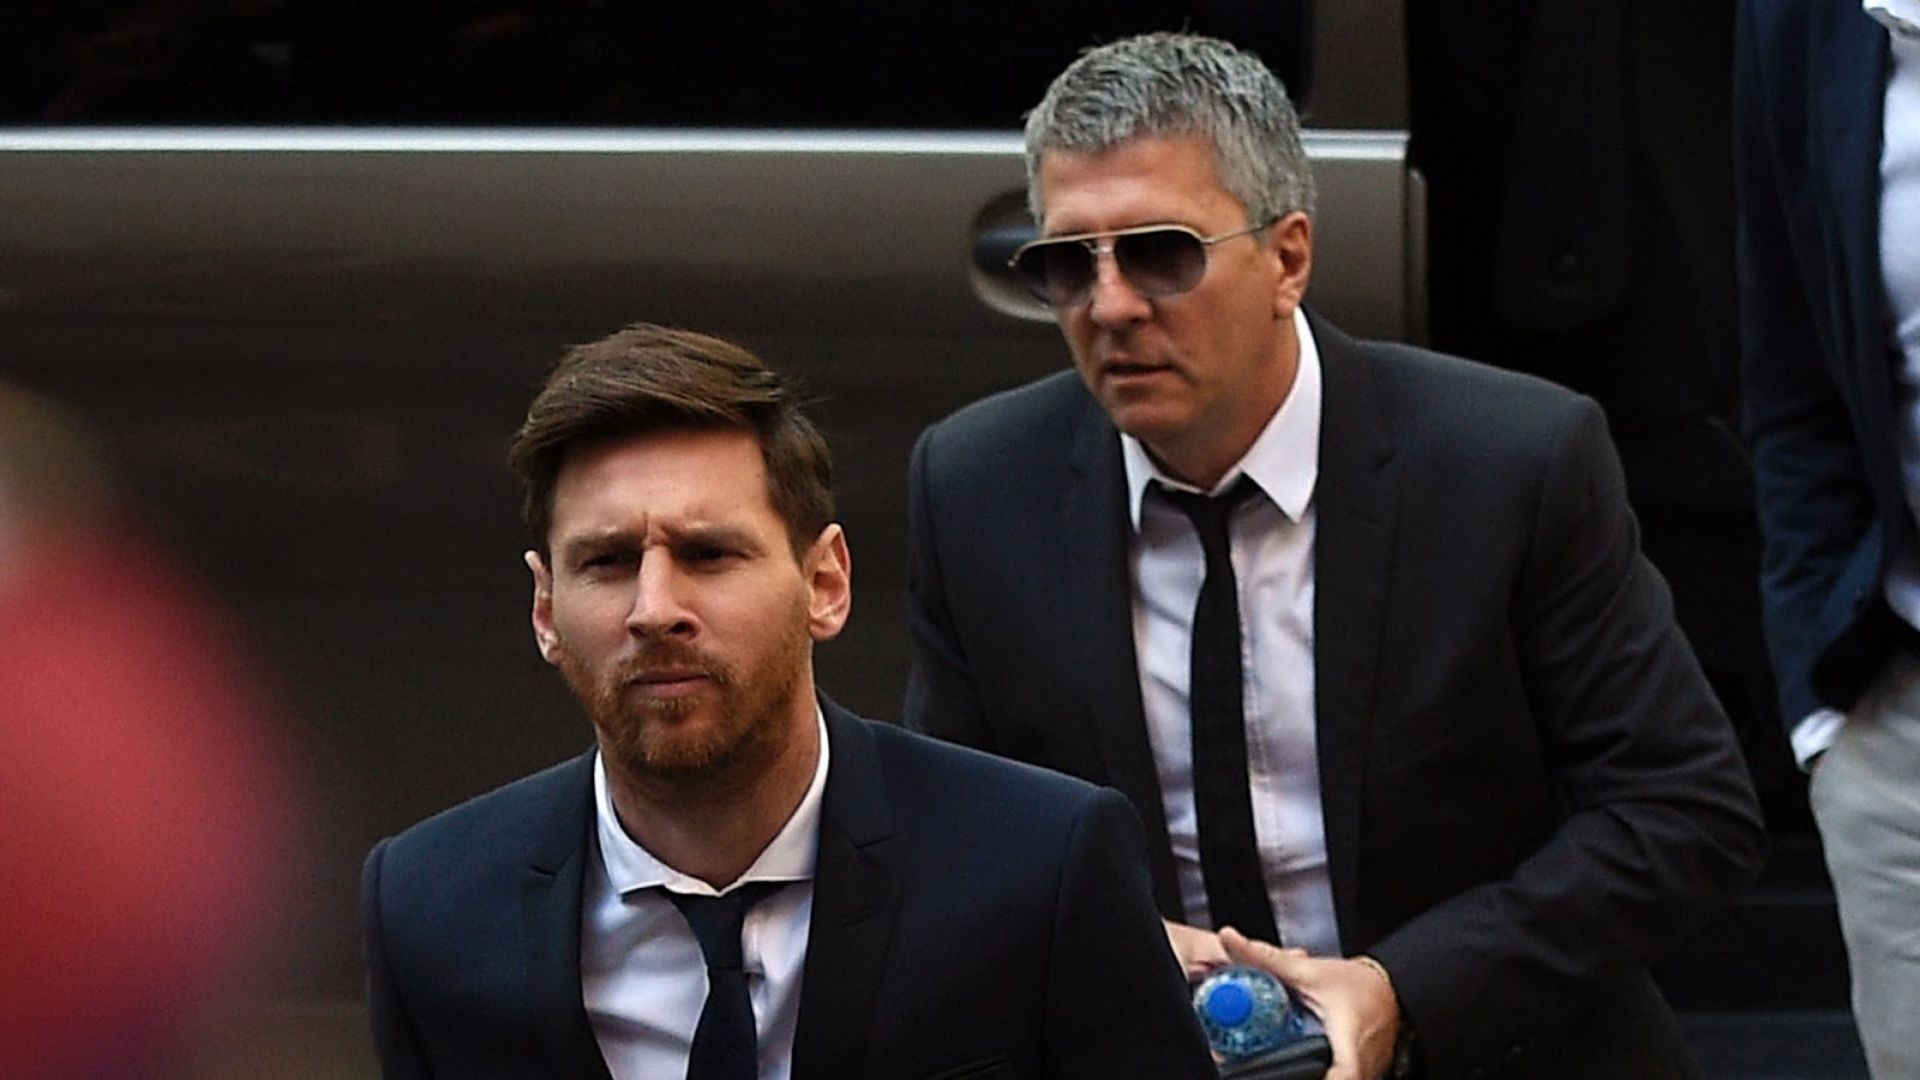 Messi's agent, Jorge Messi